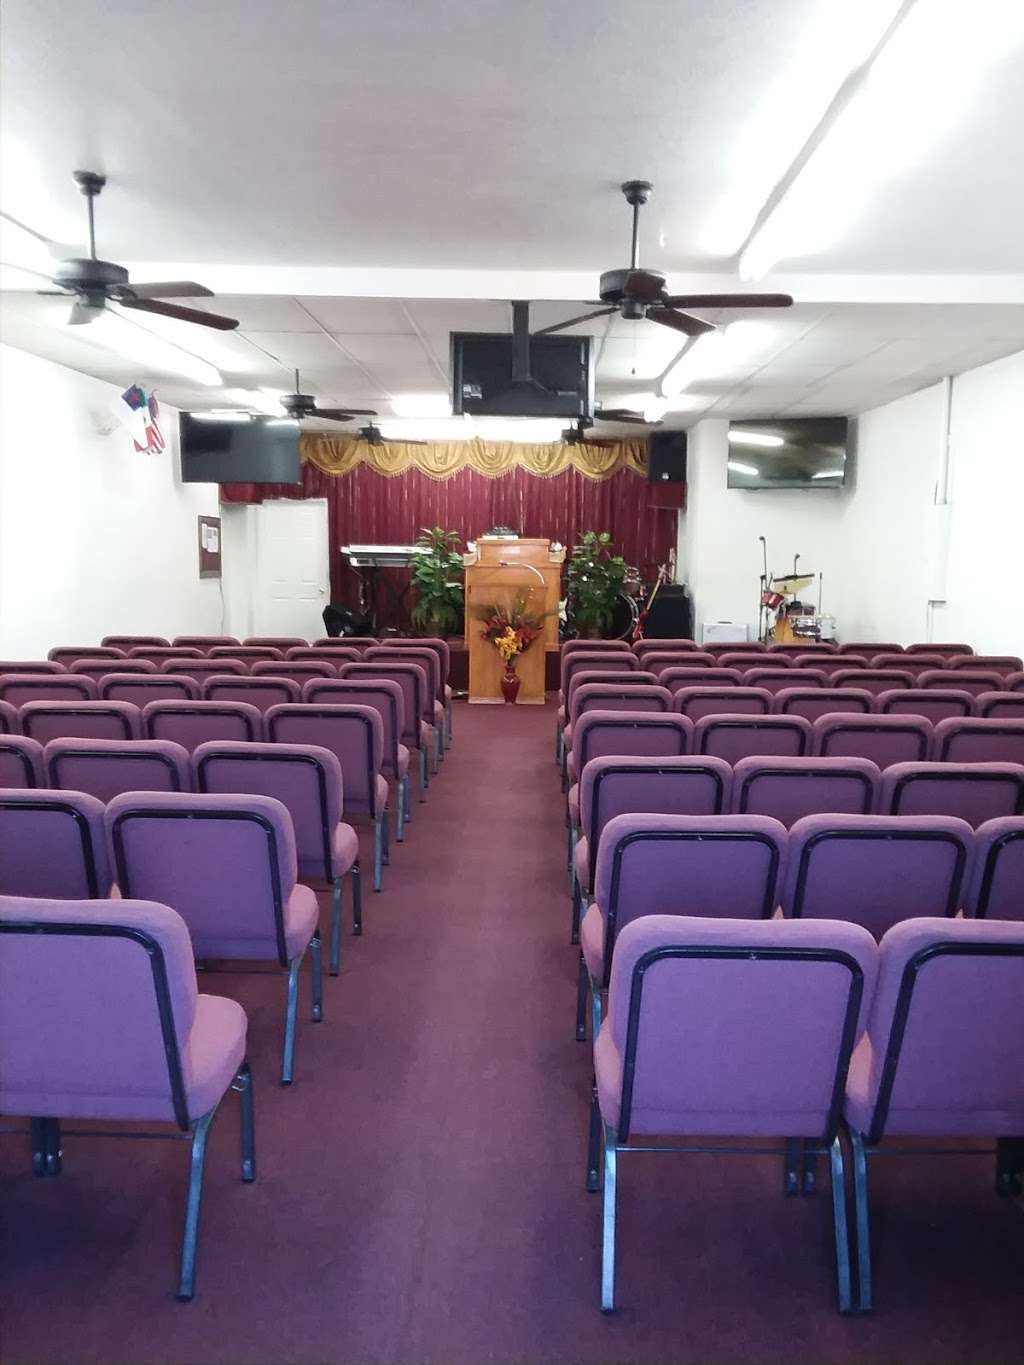 Iglesia Pentecostes Jesucristo "La Roca" | 3833 University Ave, San Diego, CA 92105 | Phone: (619) 527-2363